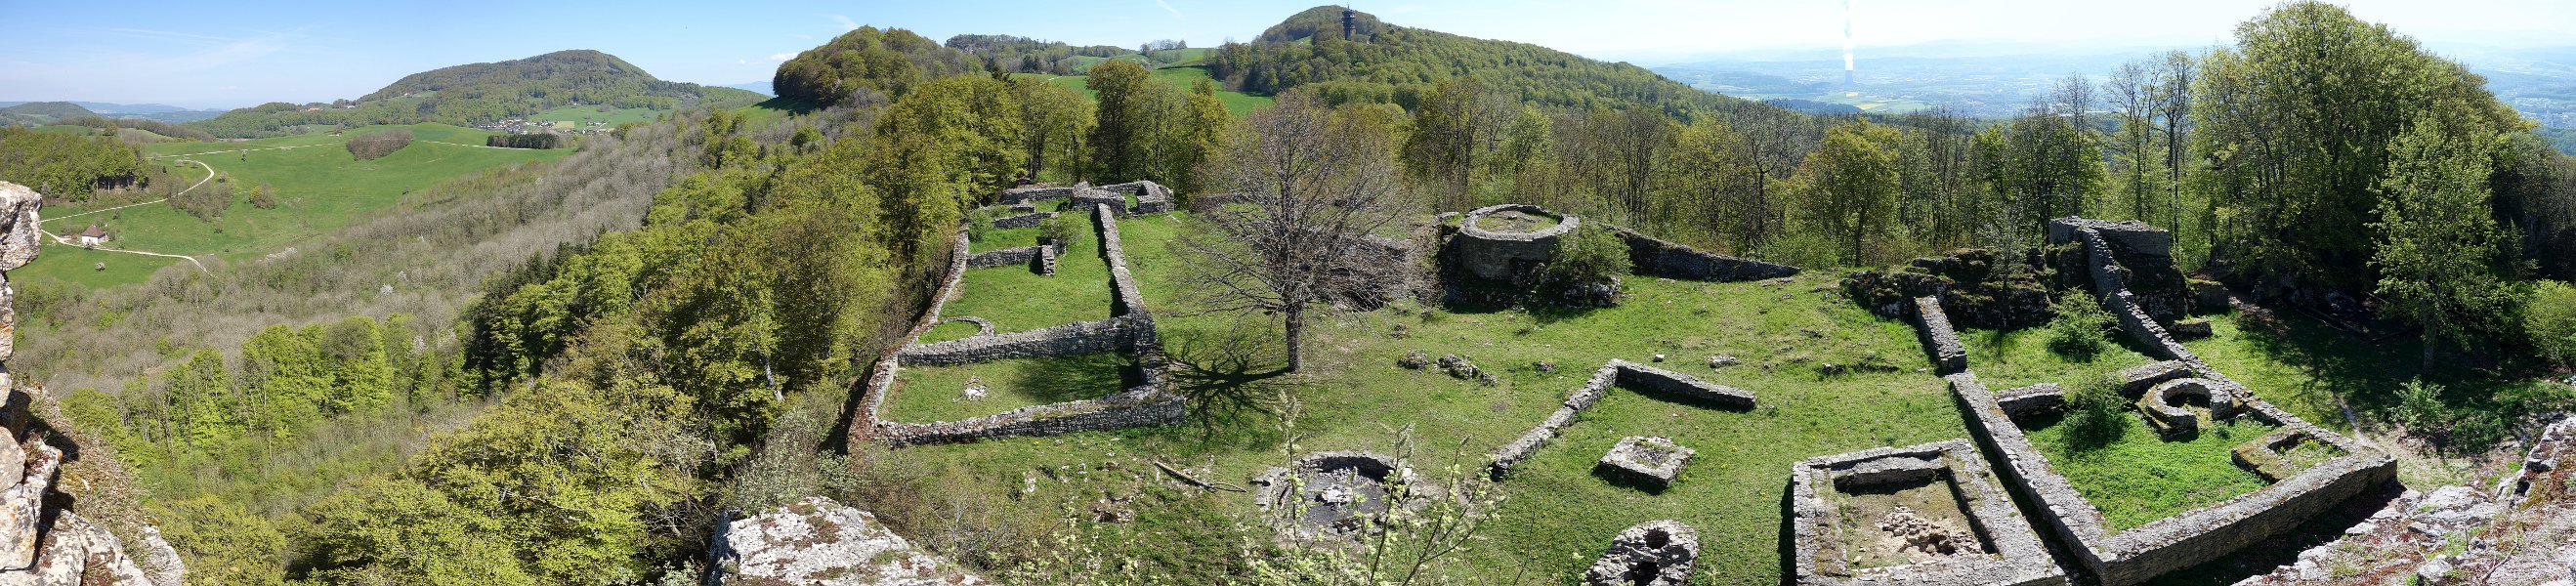 Ruine Froburg